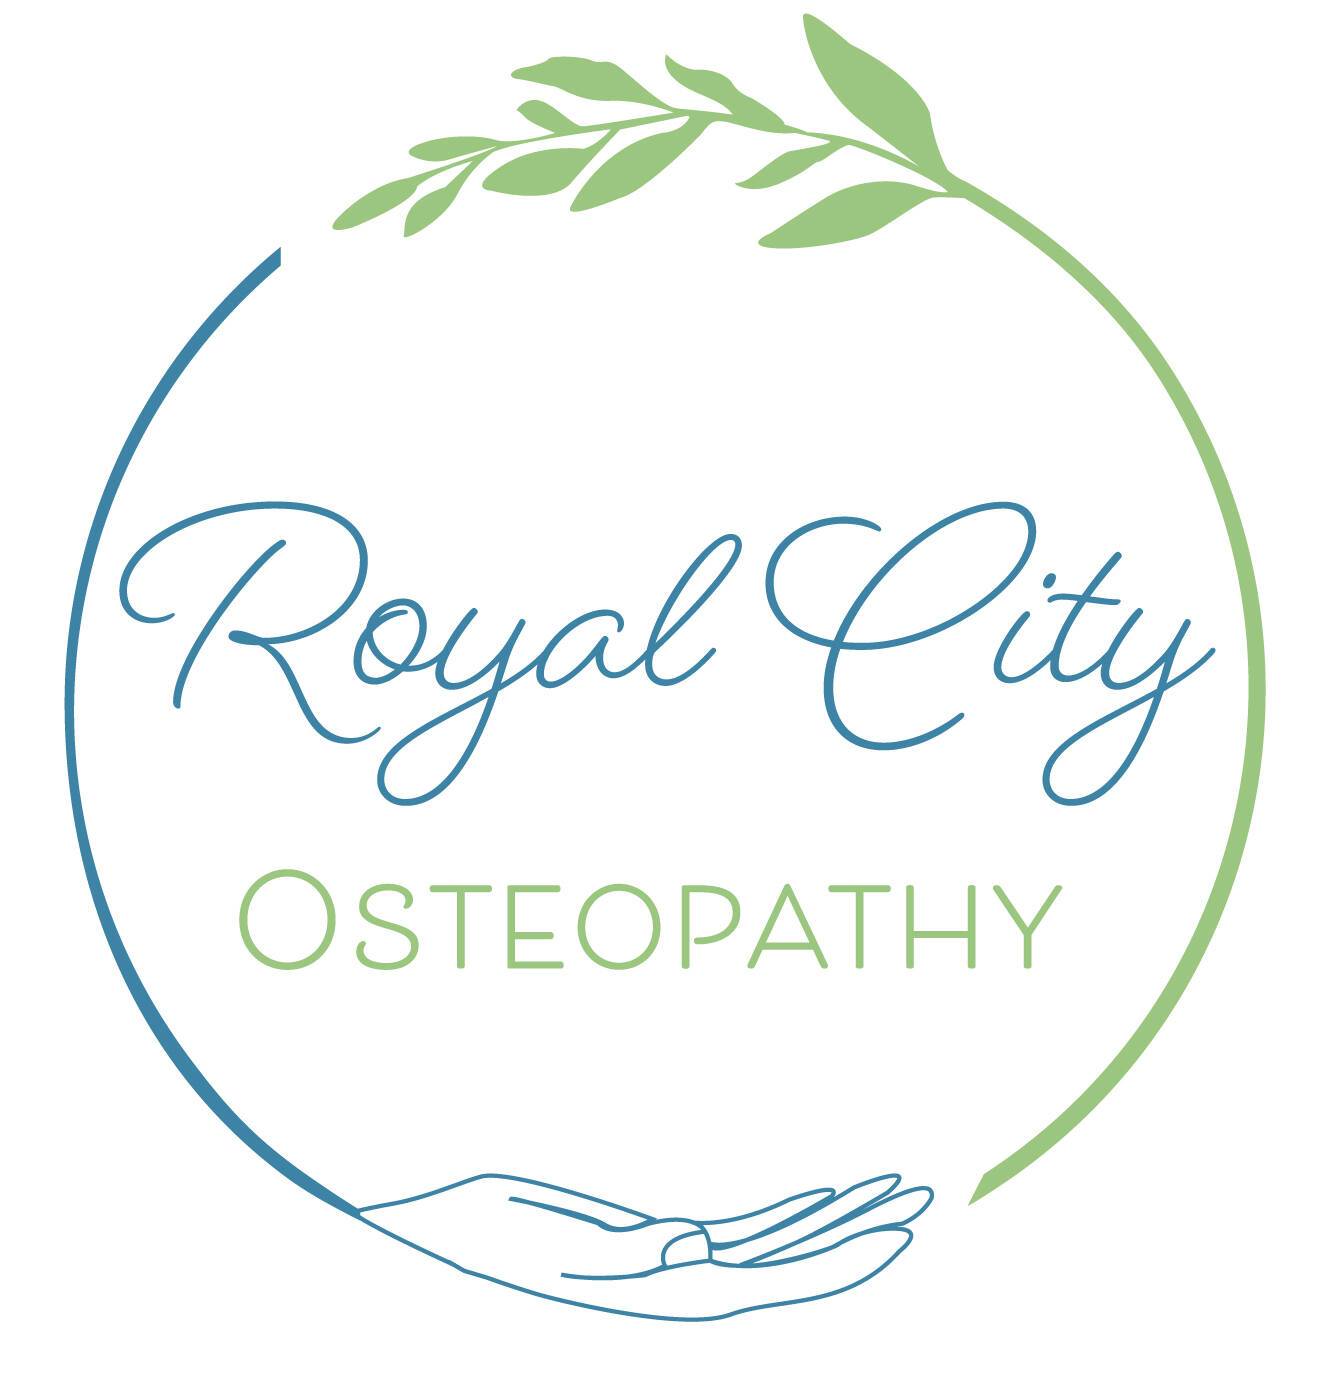 Royal City Osteopathy